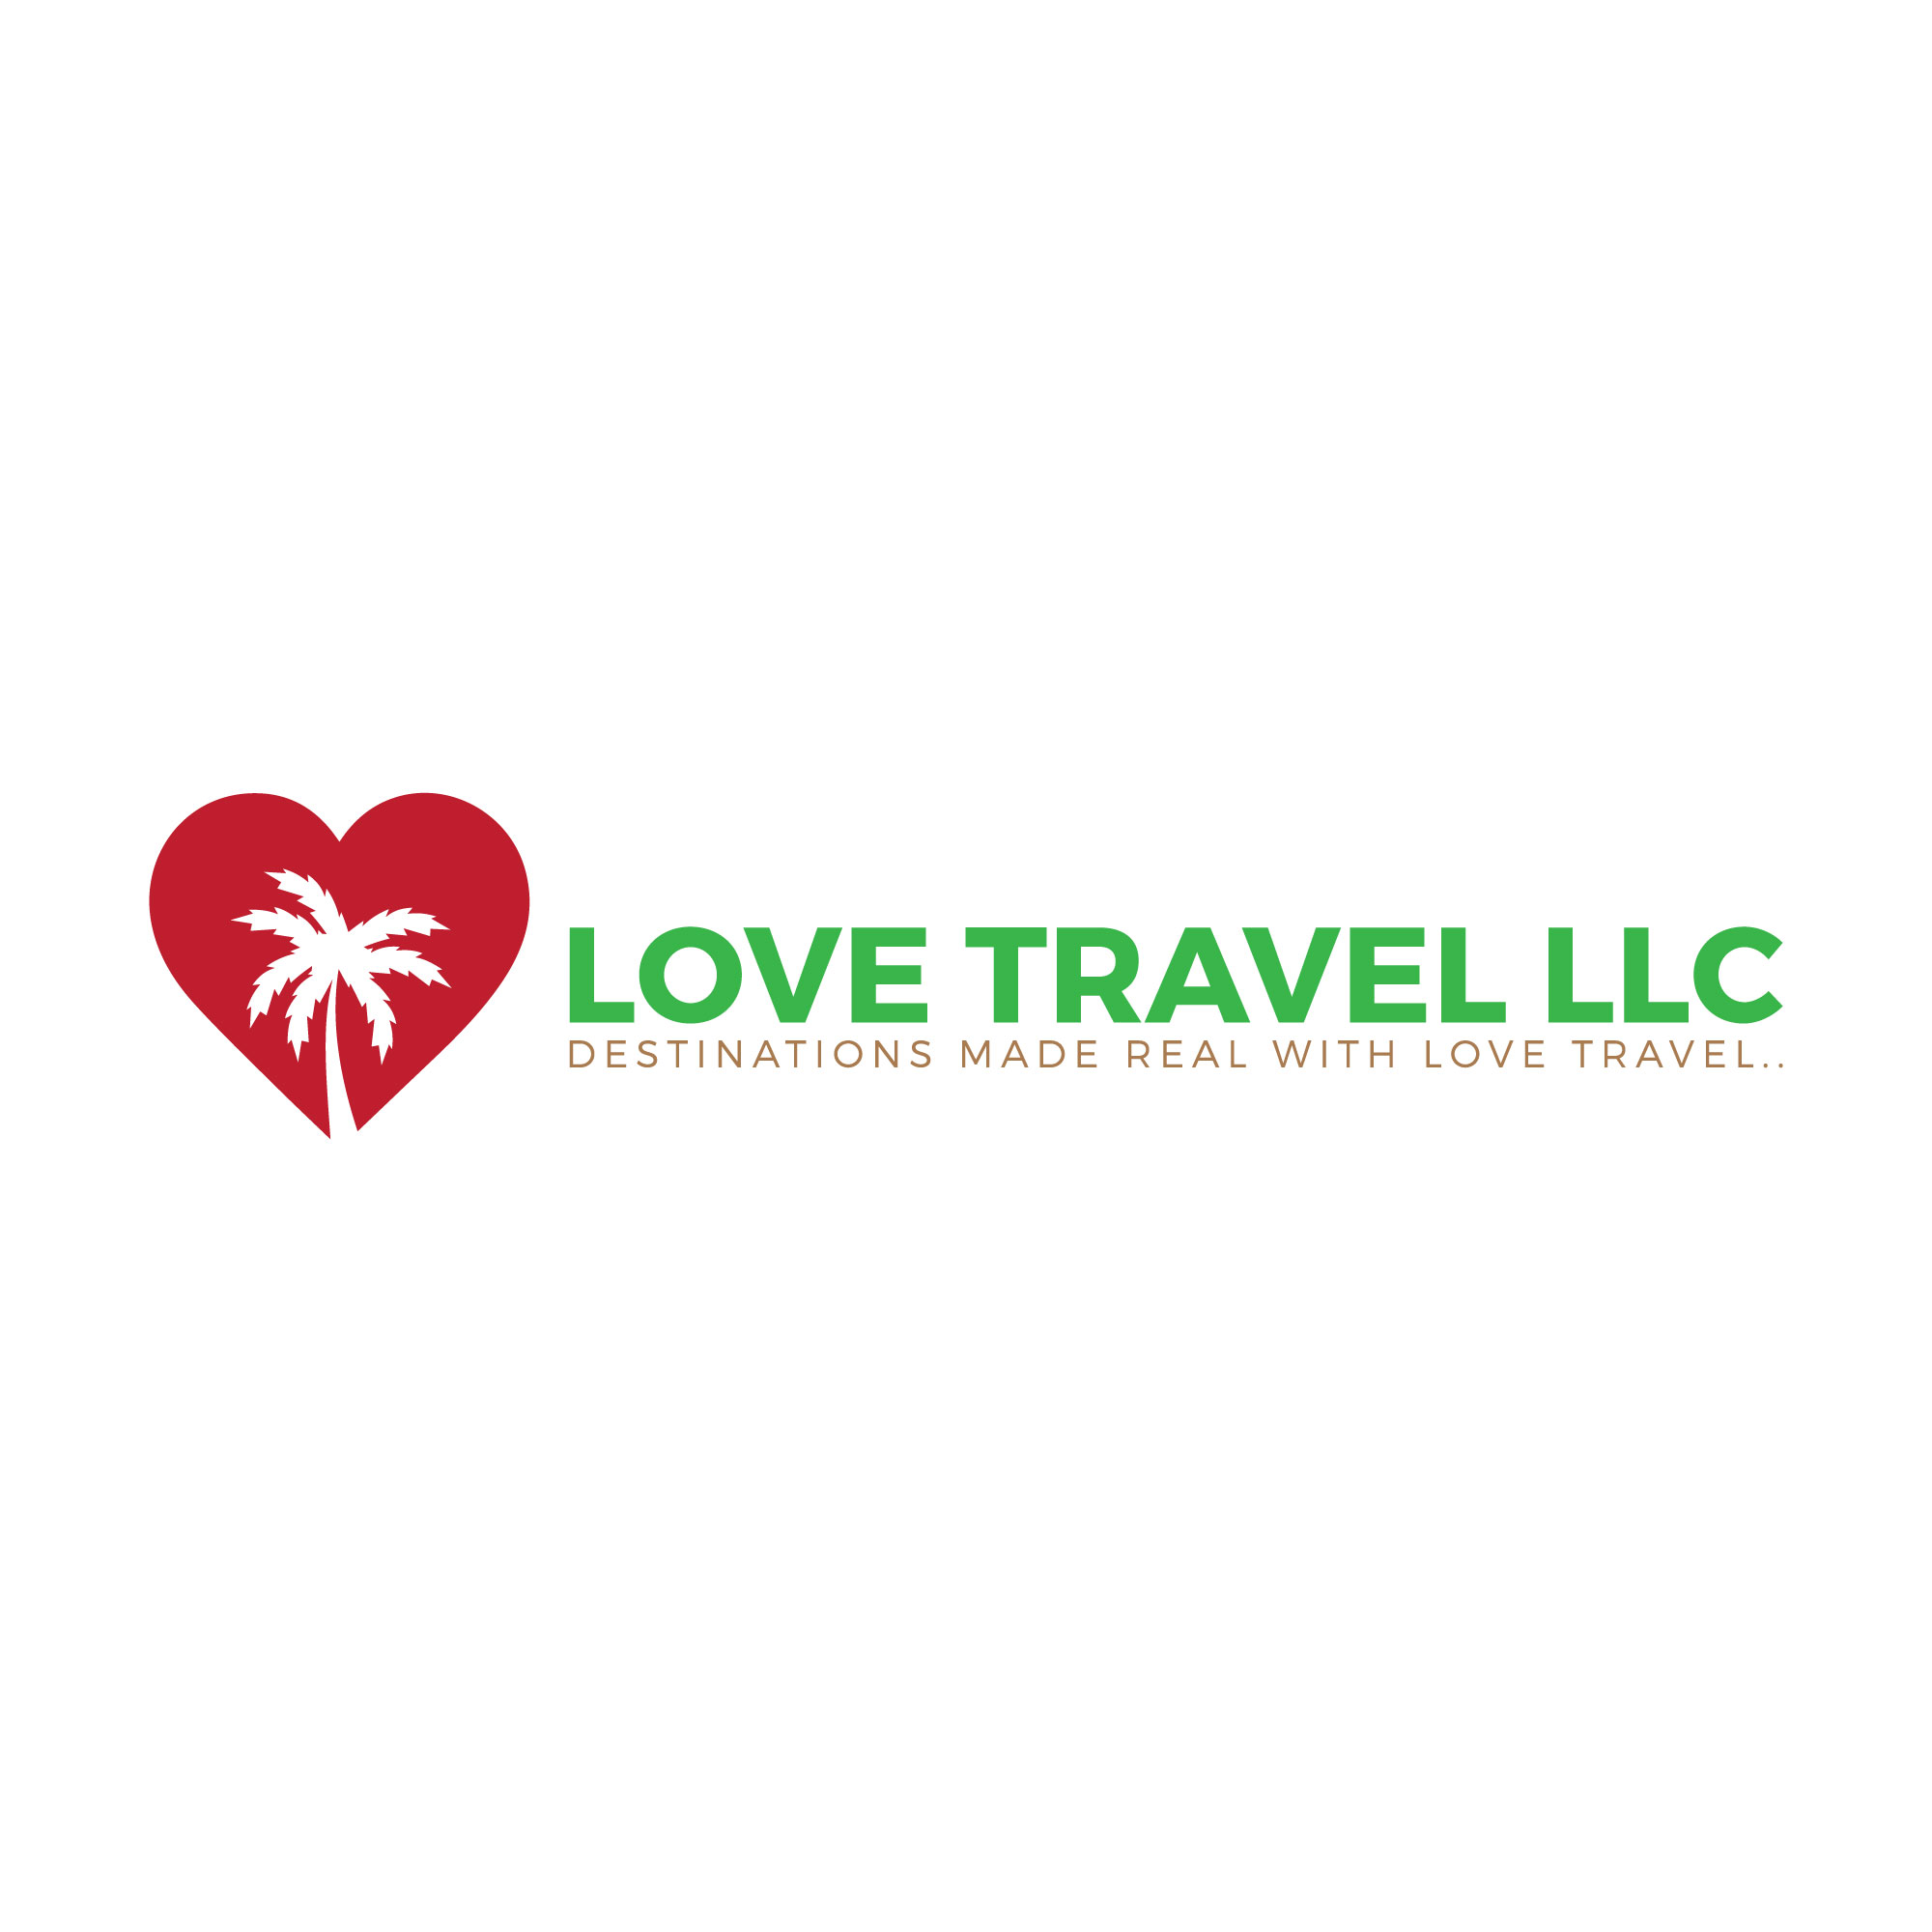 Love Travel LLC